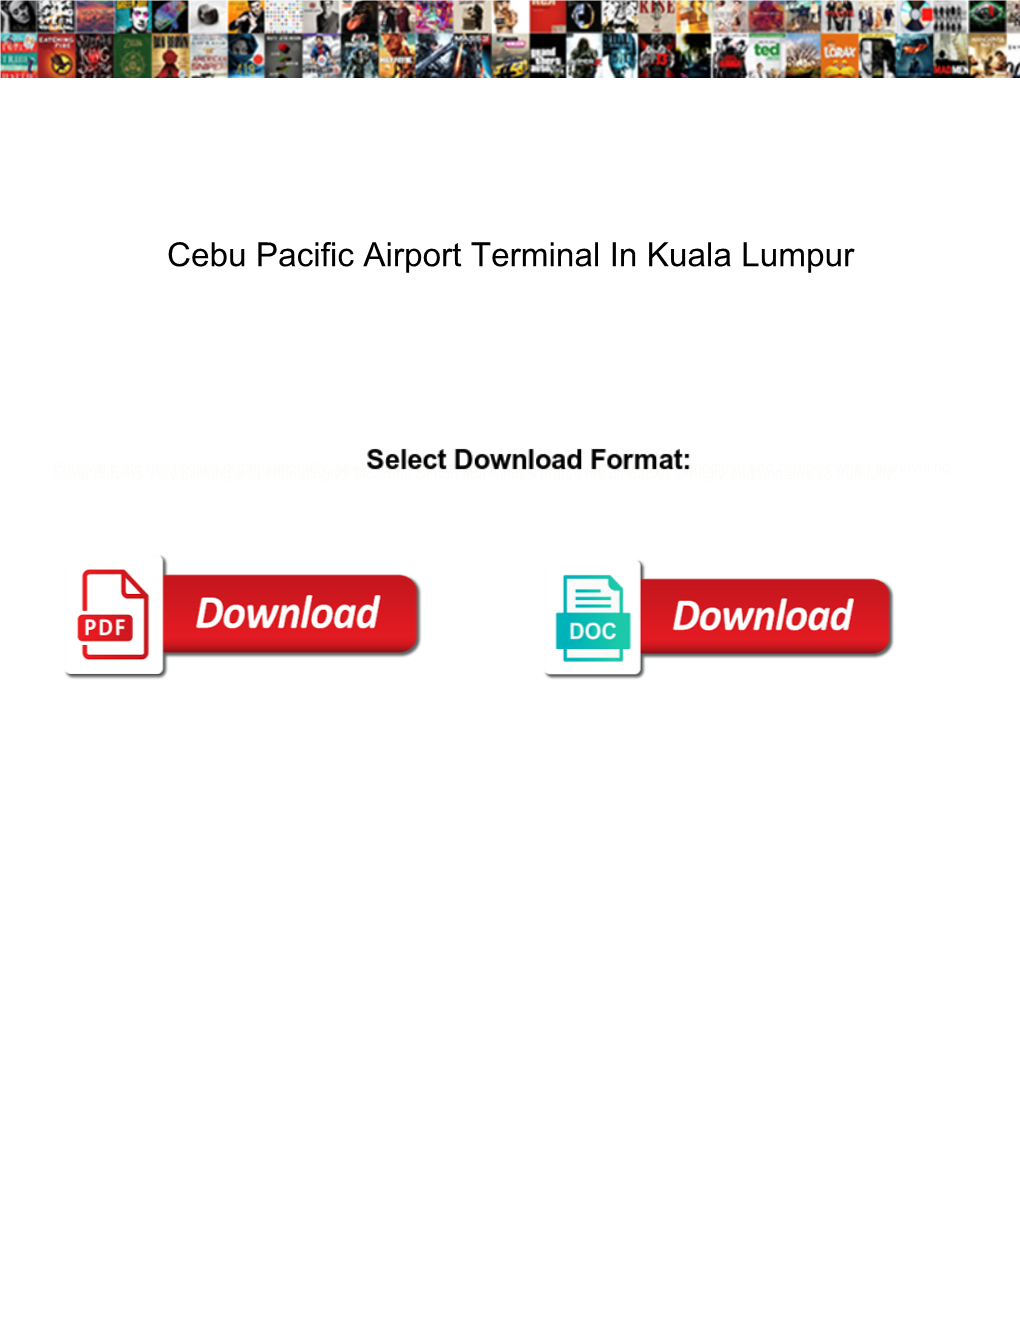 Cebu Pacific Airport Terminal in Kuala Lumpur